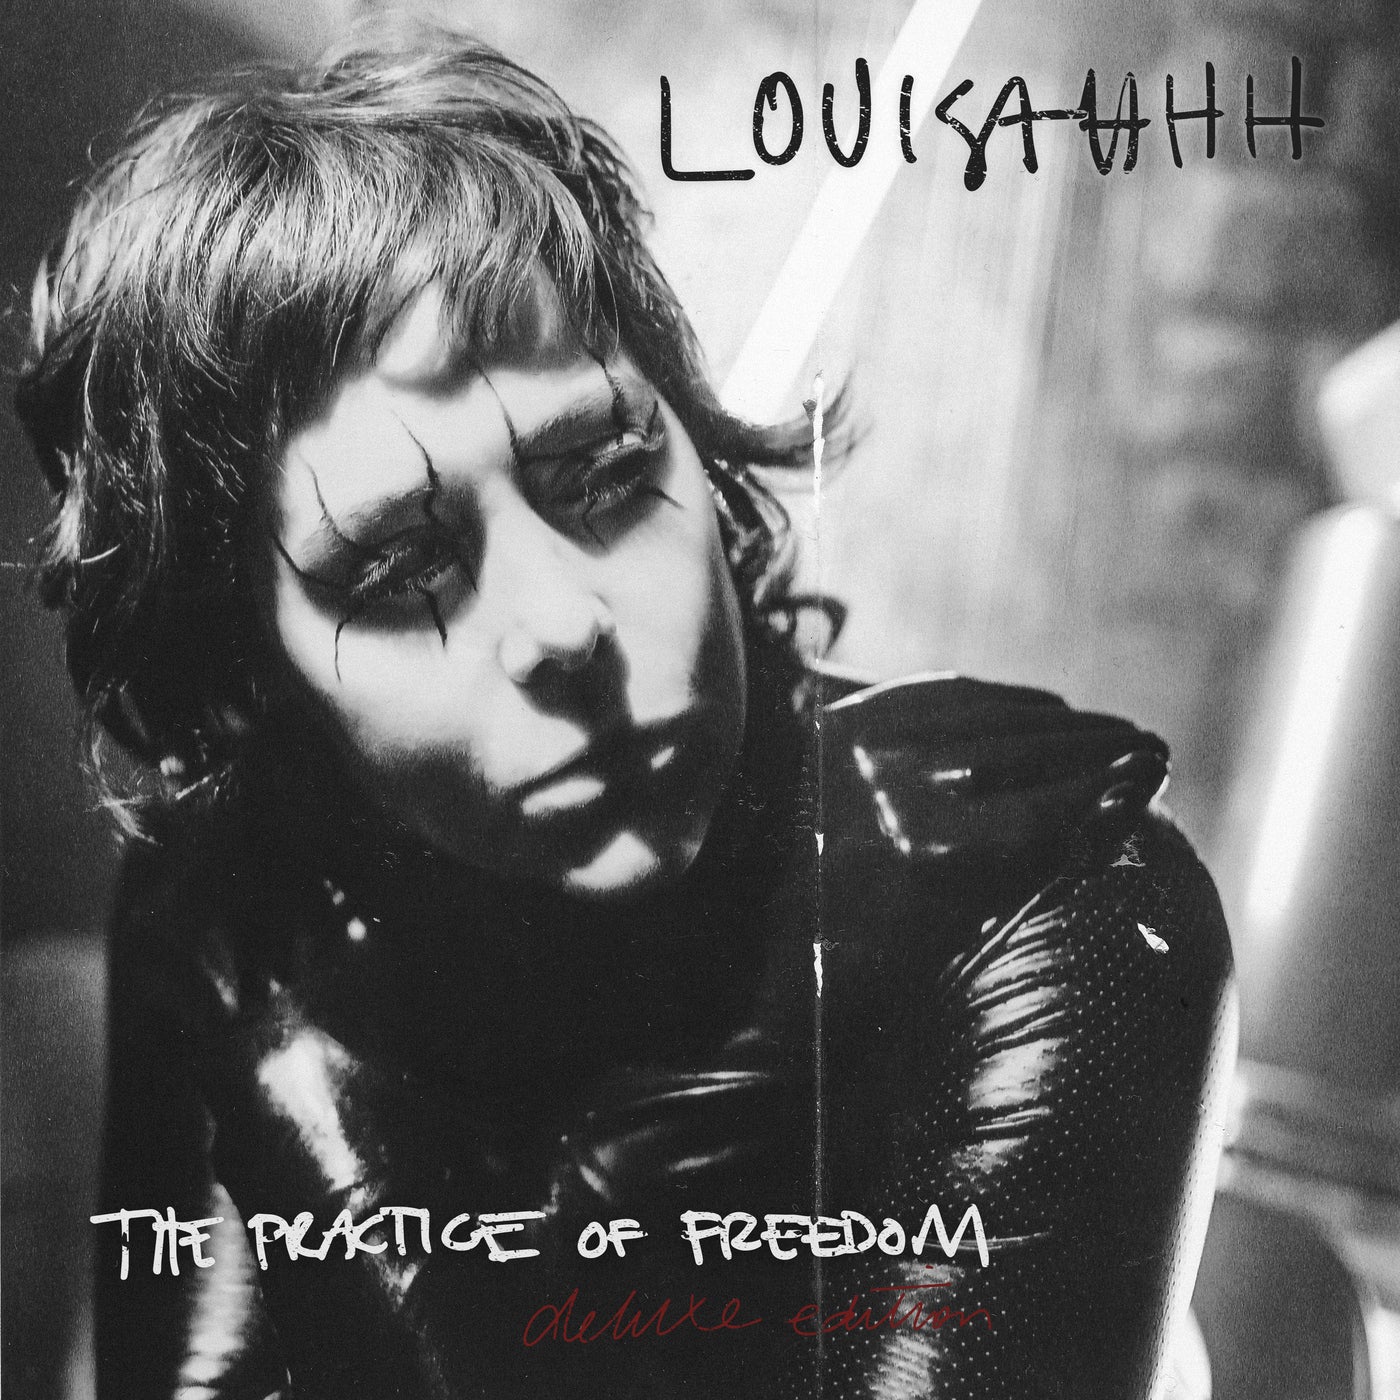 The Practice of Freedom (Deluxe)